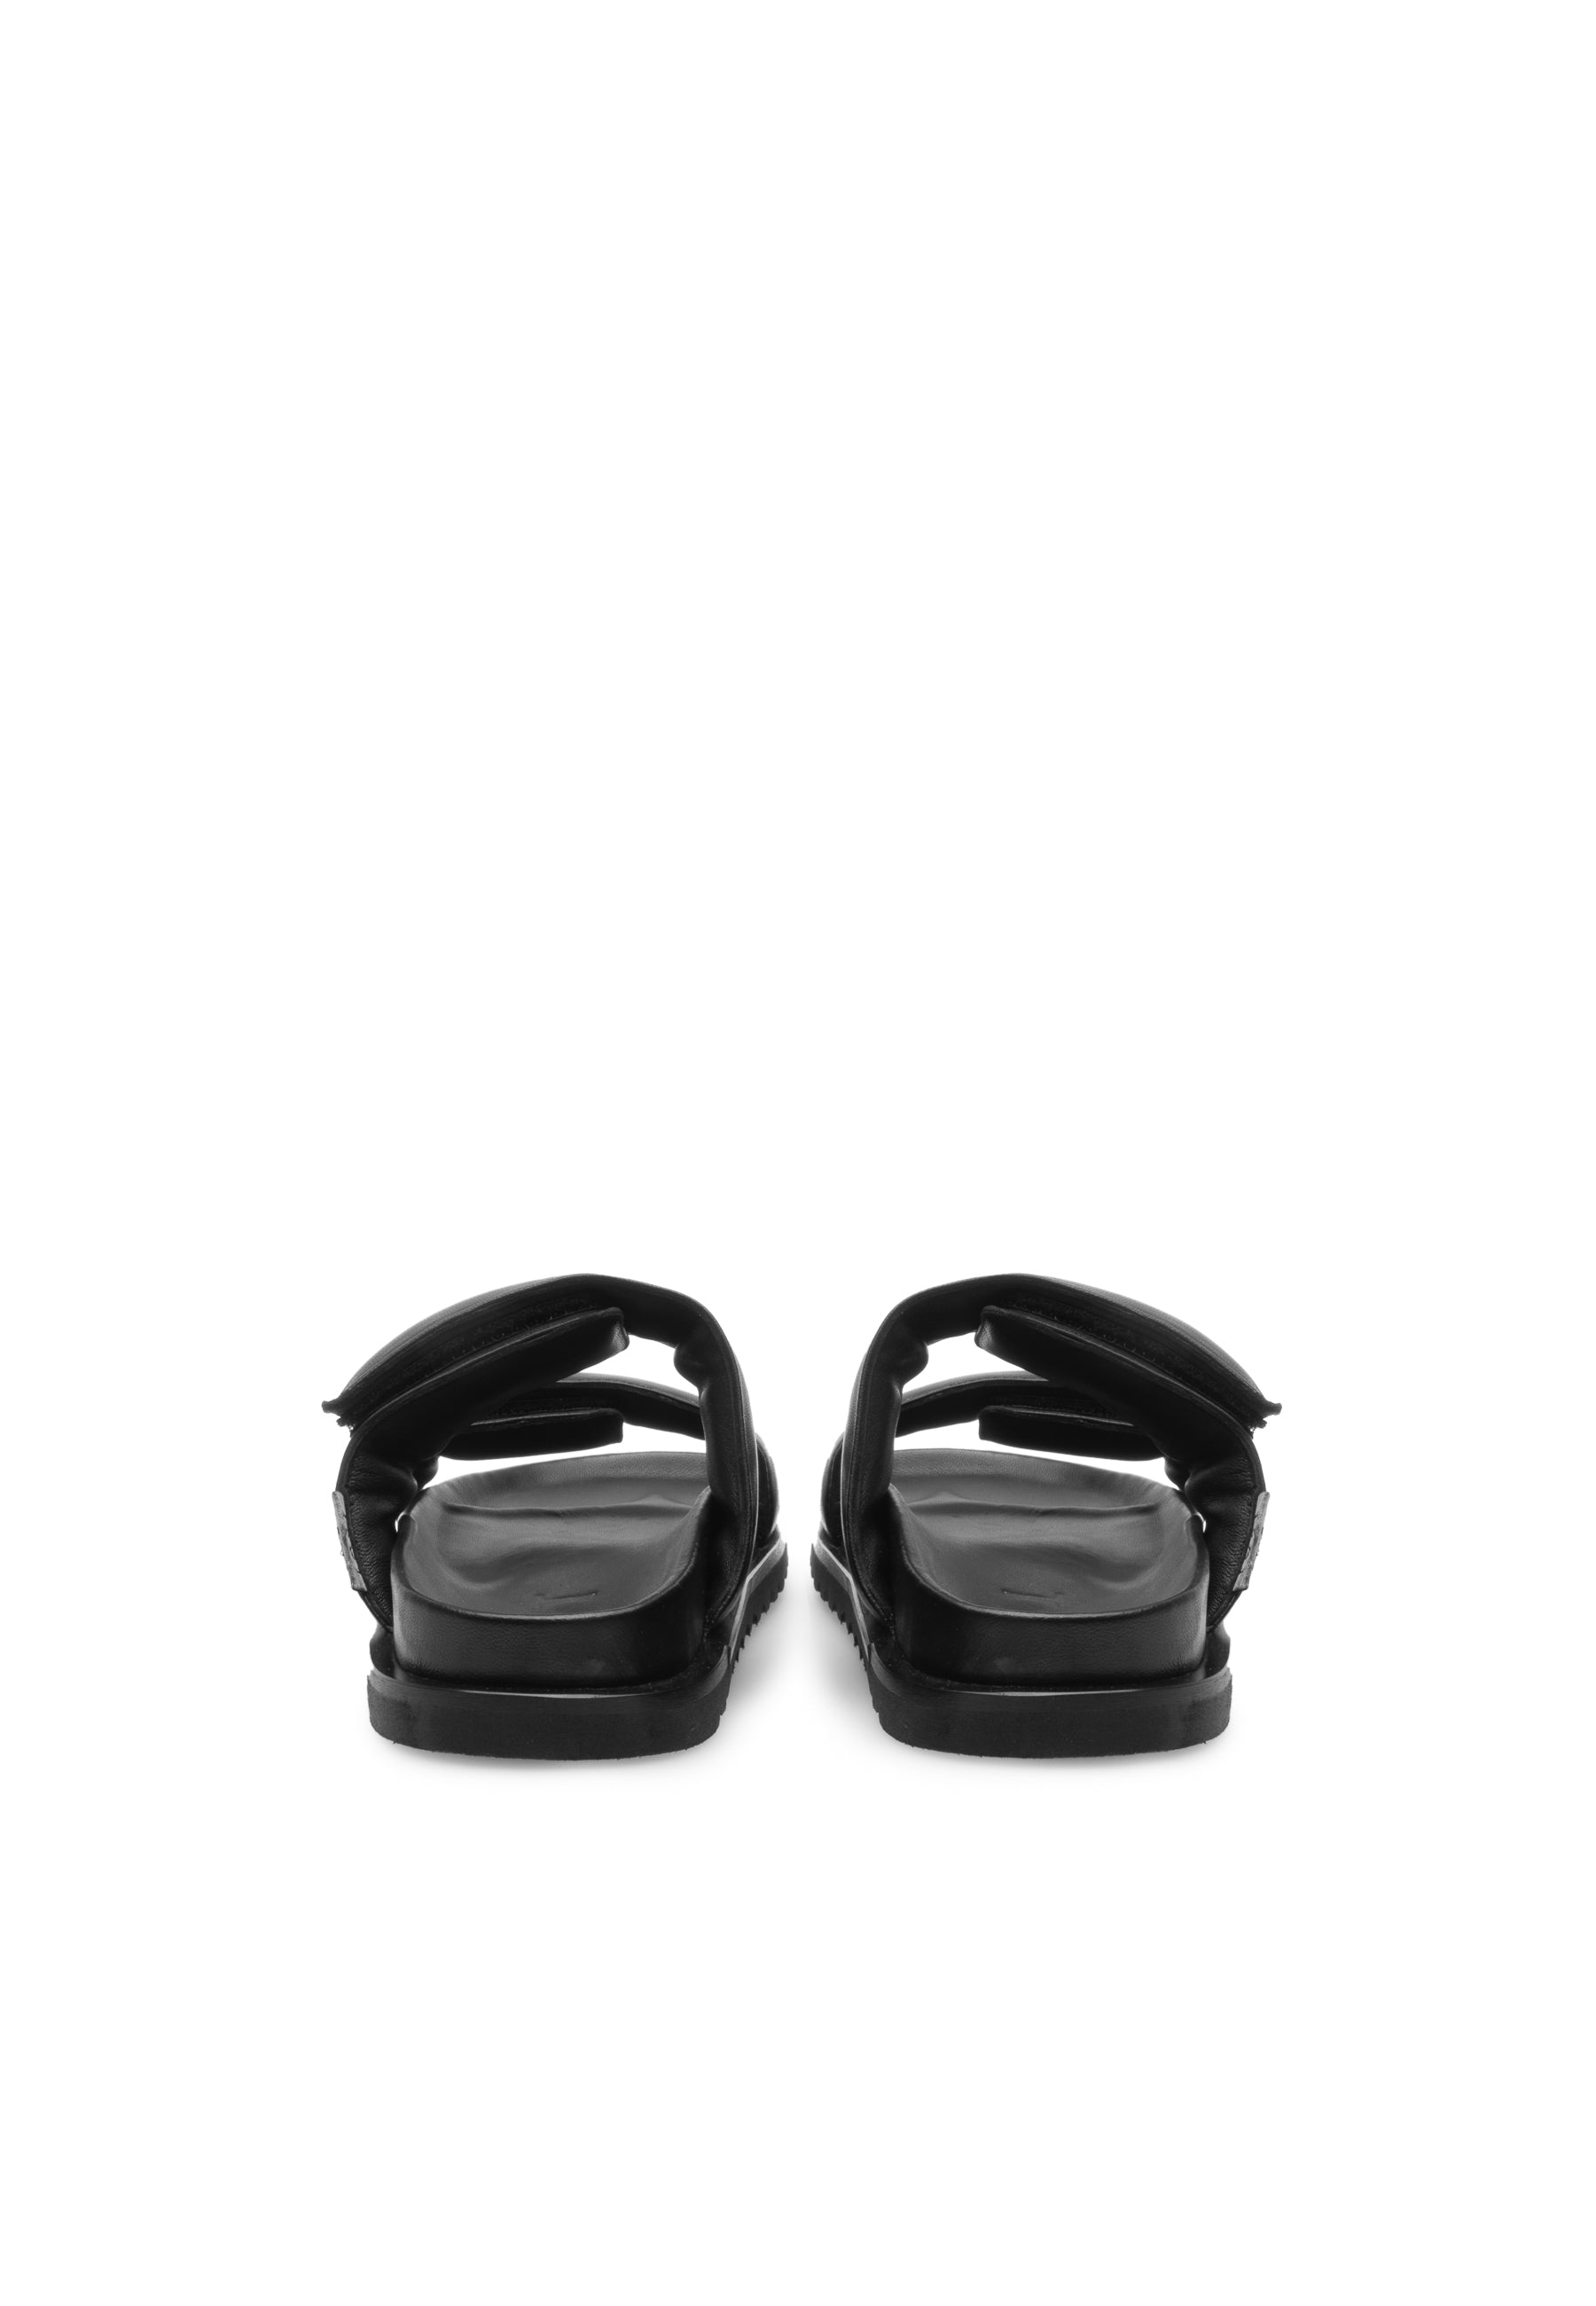 Corine Black Leather Puffy Sandals LAST1516 - 5